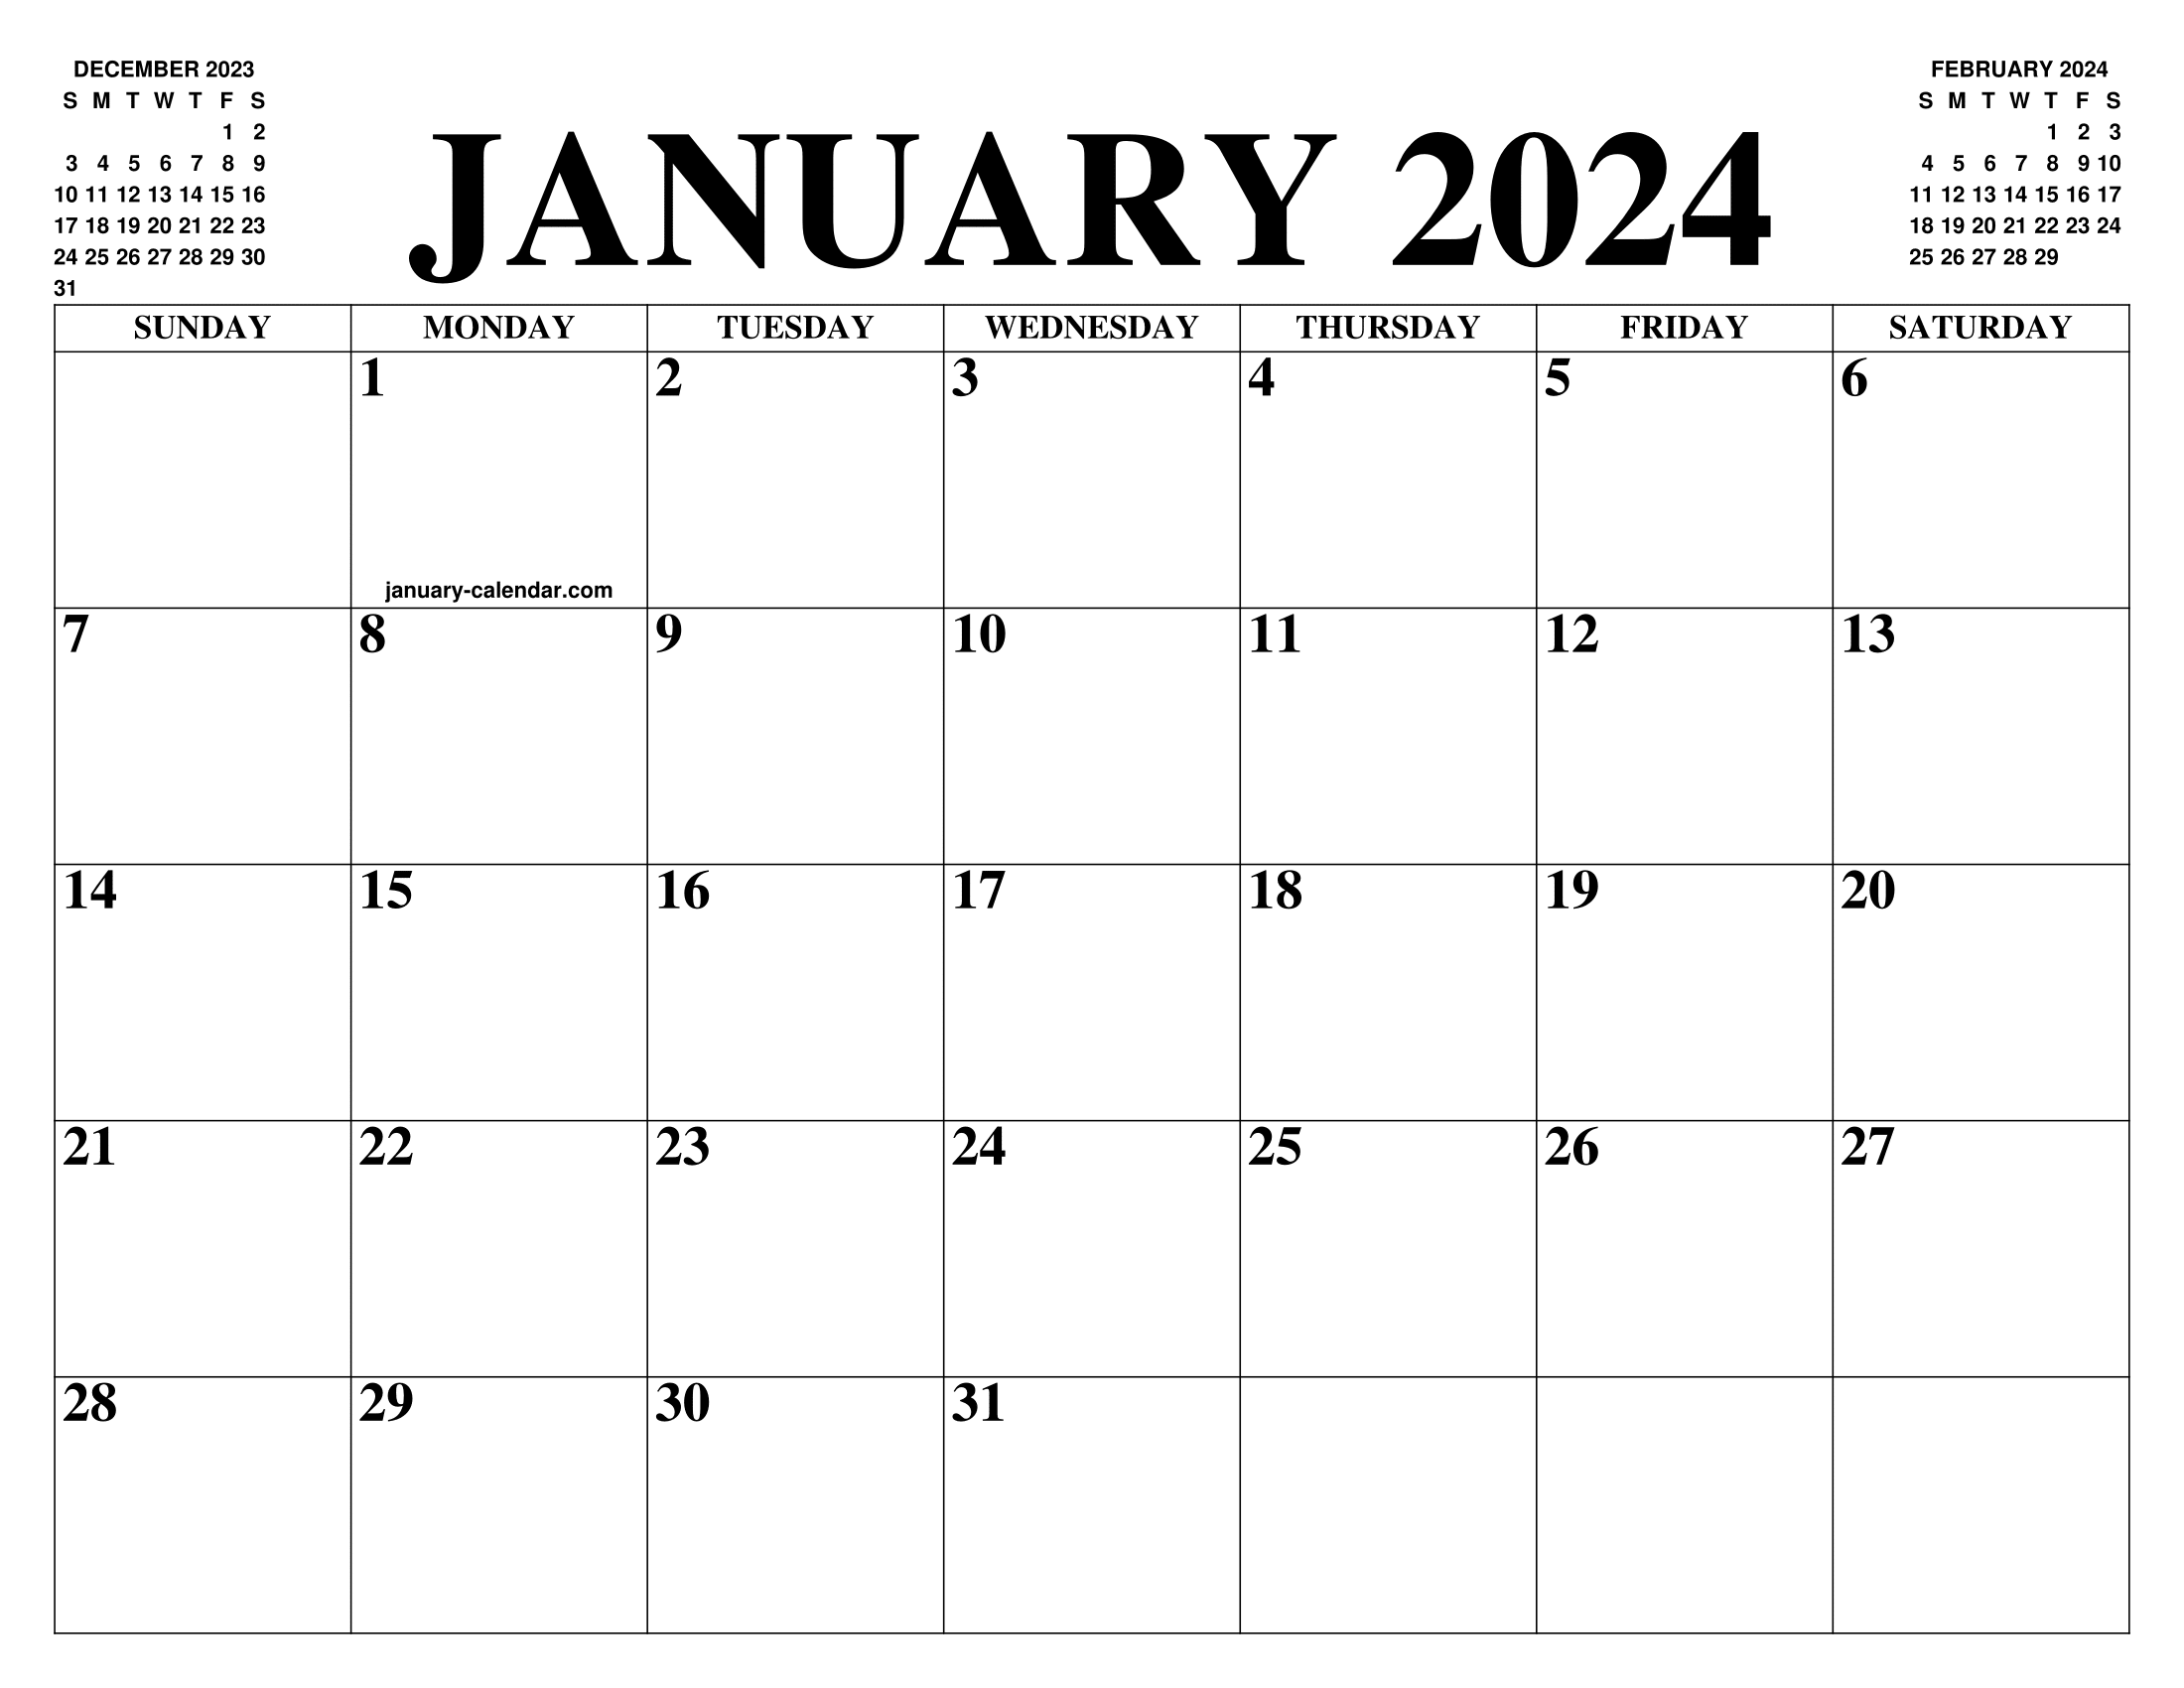 JANUARY 2024 CALENDAR OF THE MONTH FREE PRINTABLE JANUARY 2024 